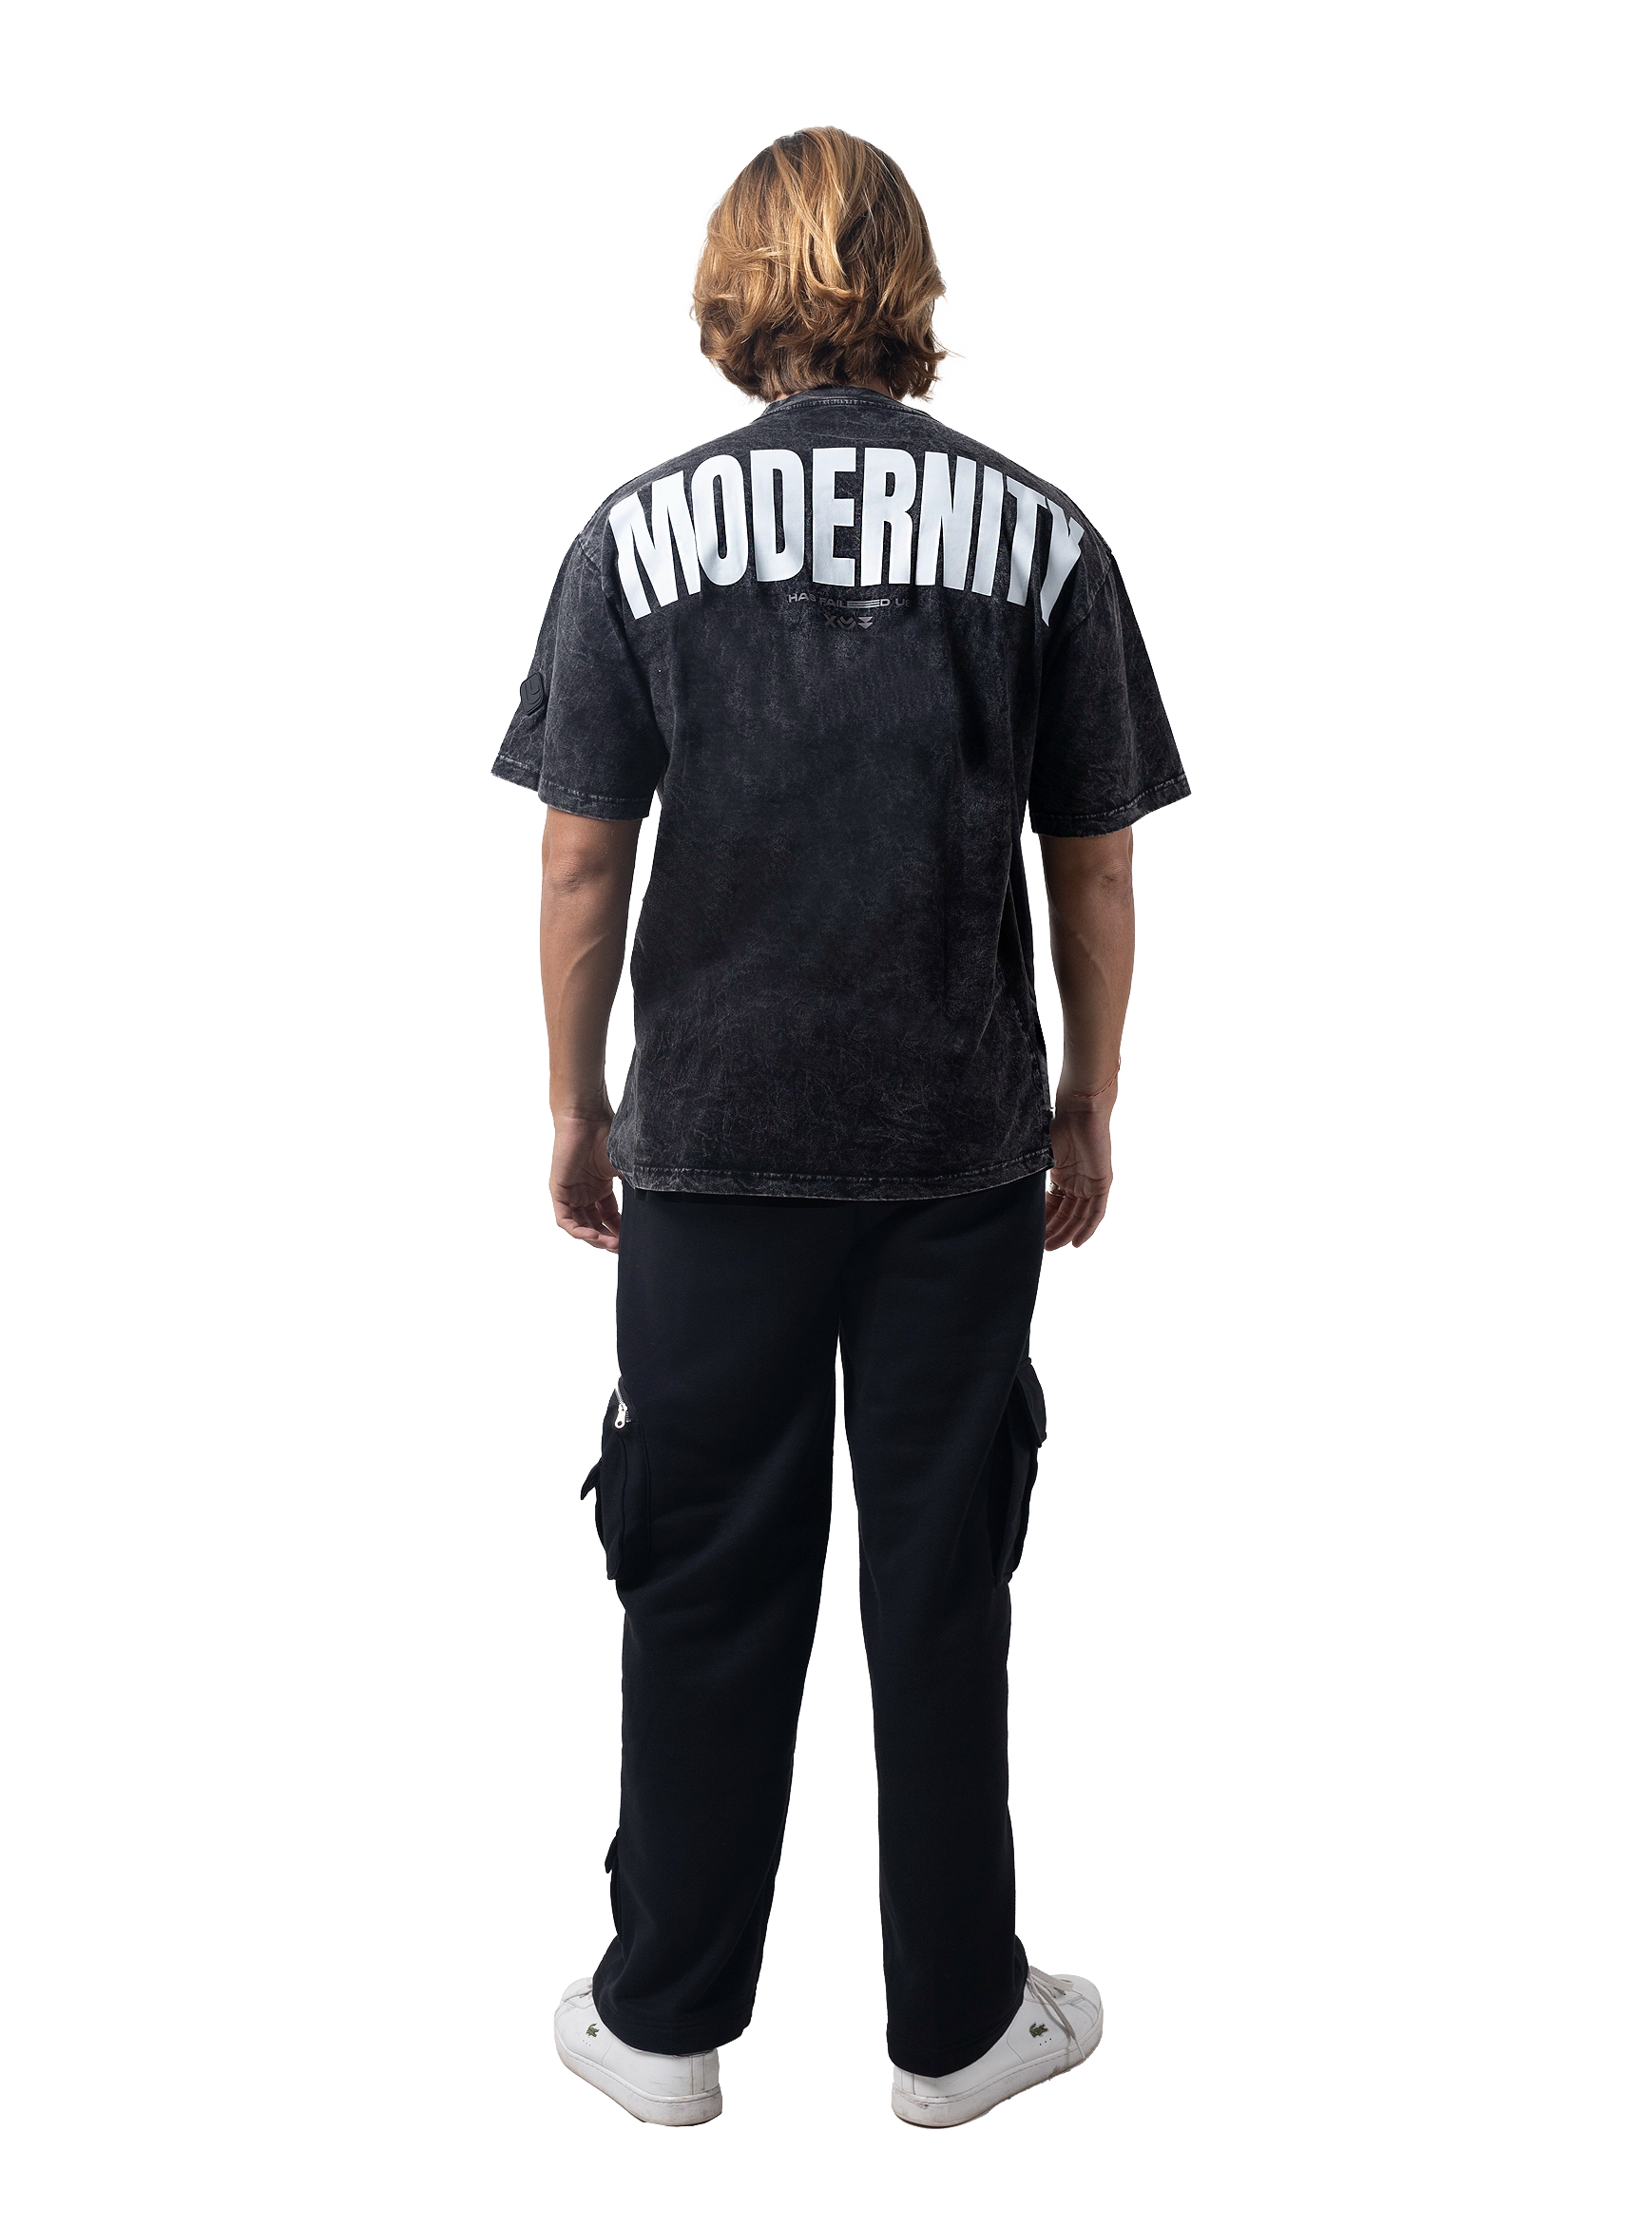 Modernity has failed us - Washed black T-shirt